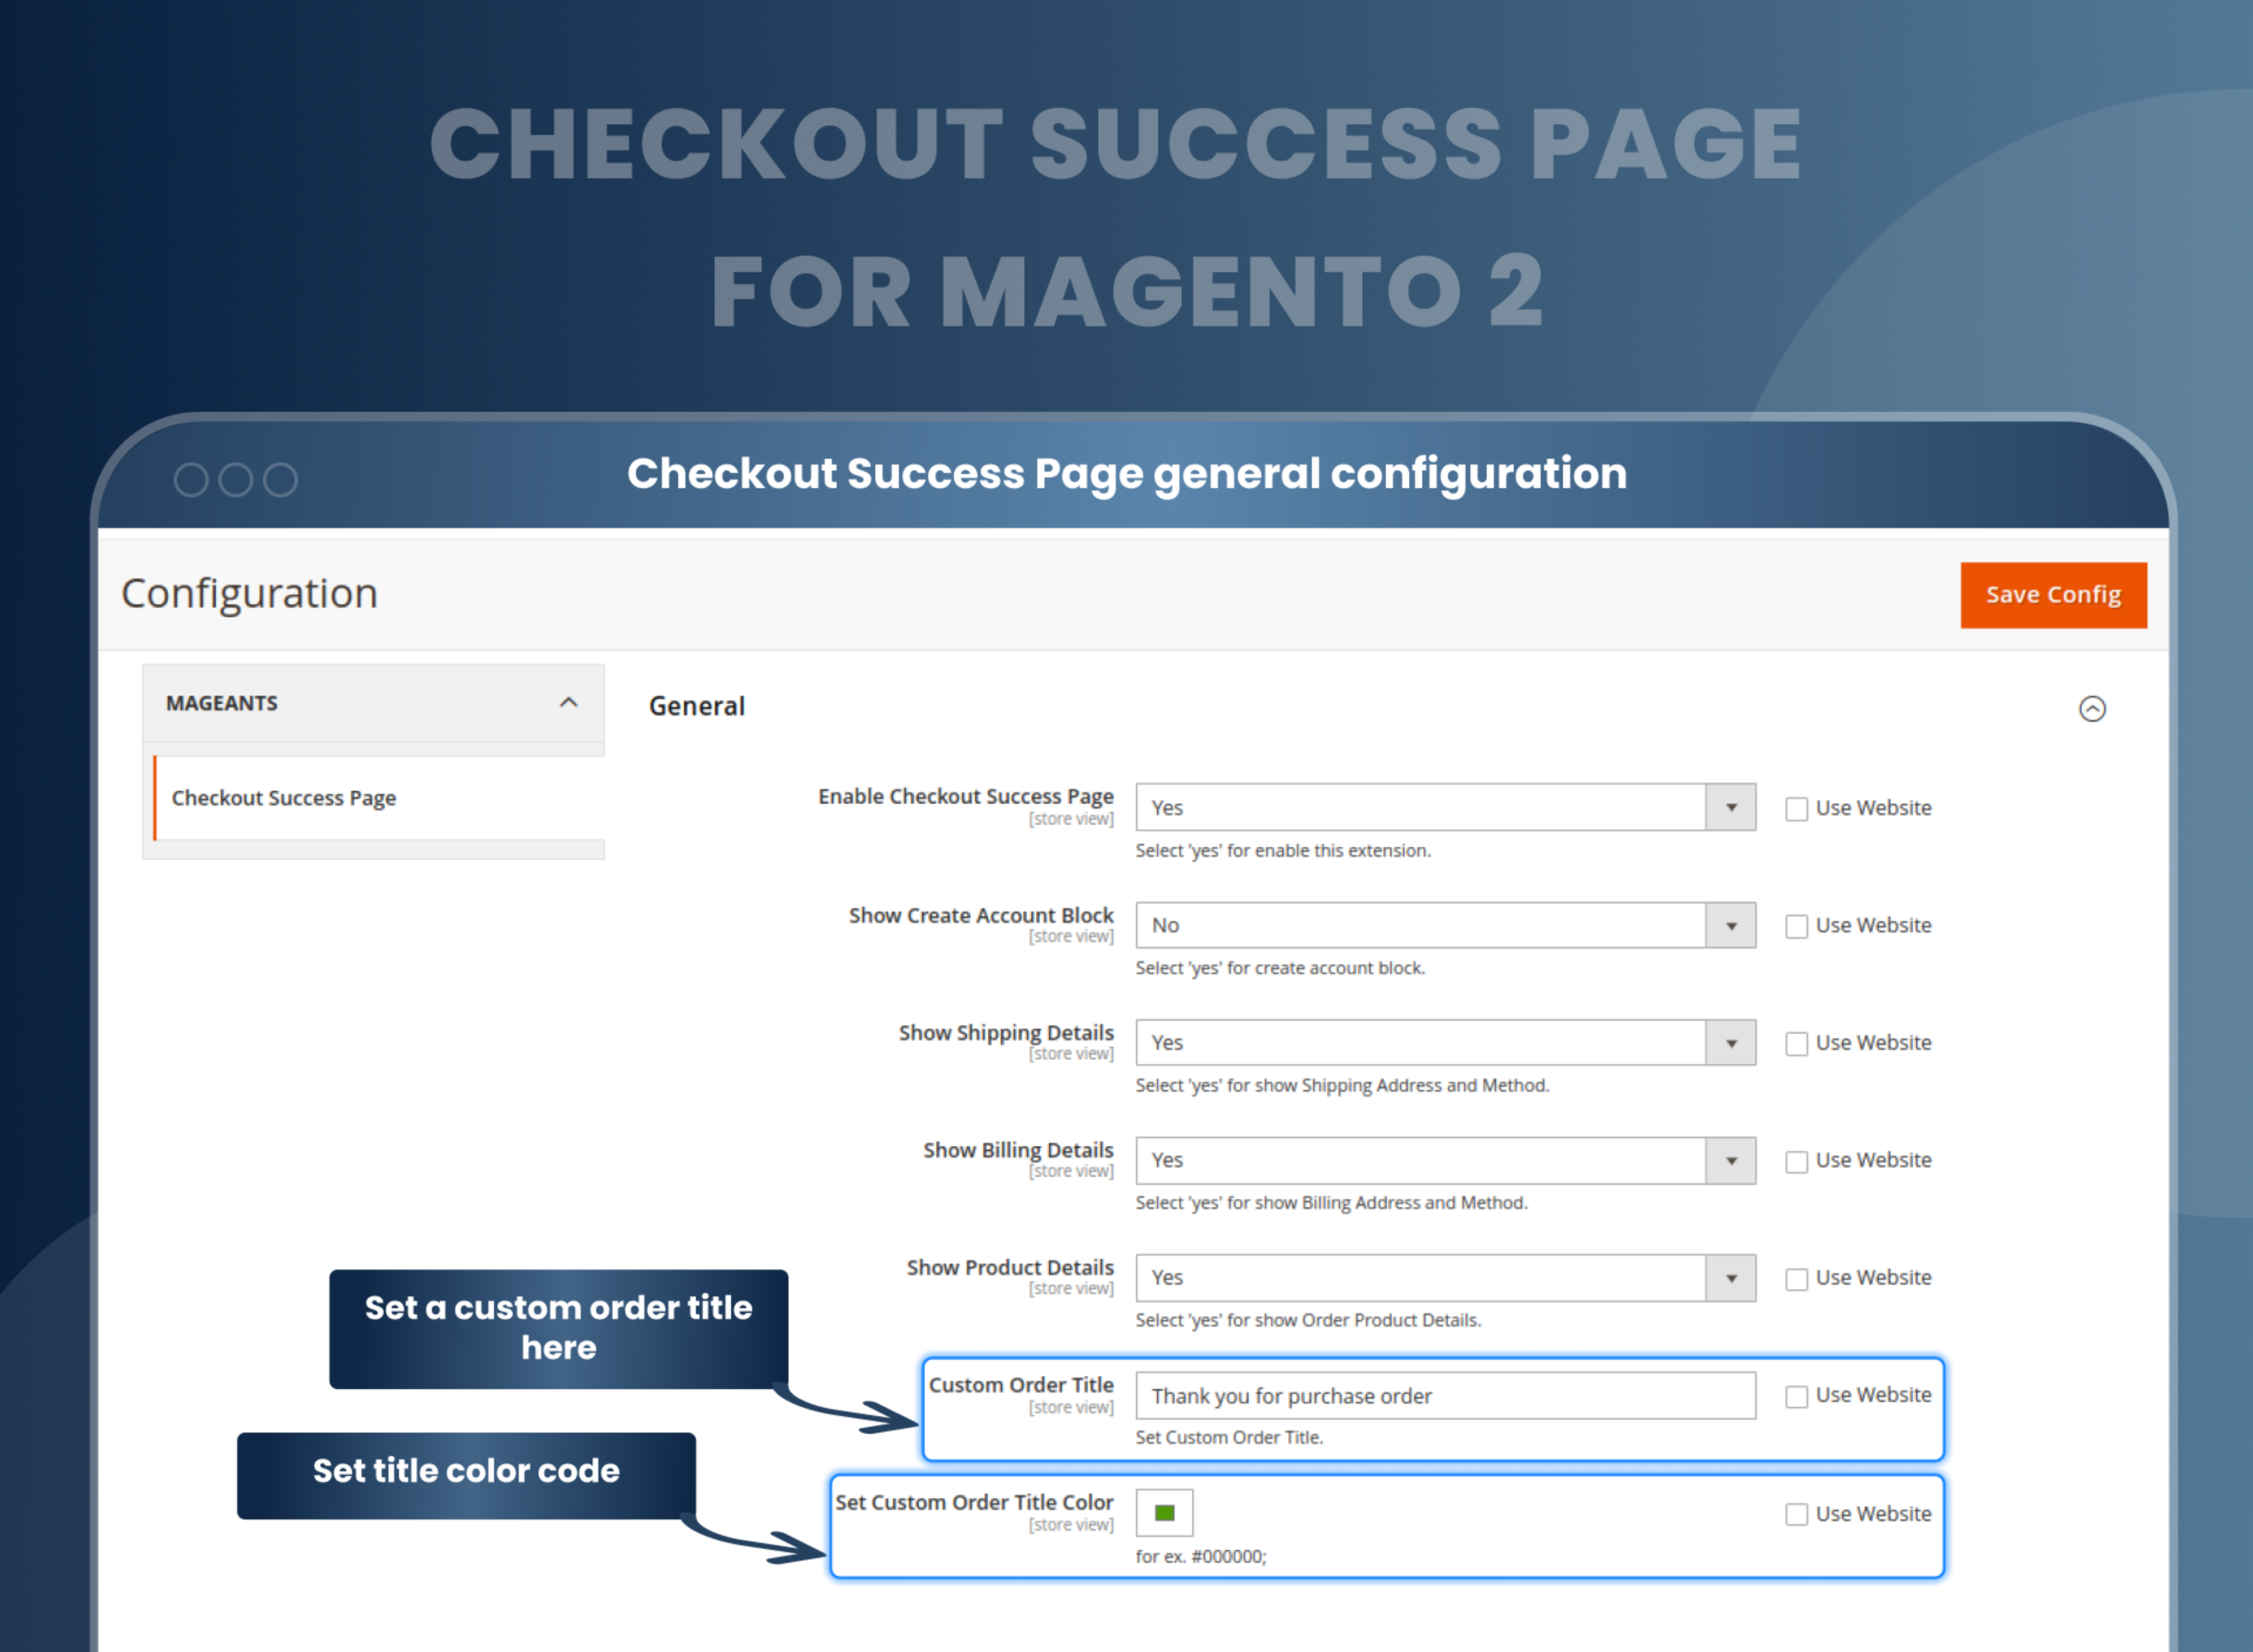 Checkout Success Page general configuration